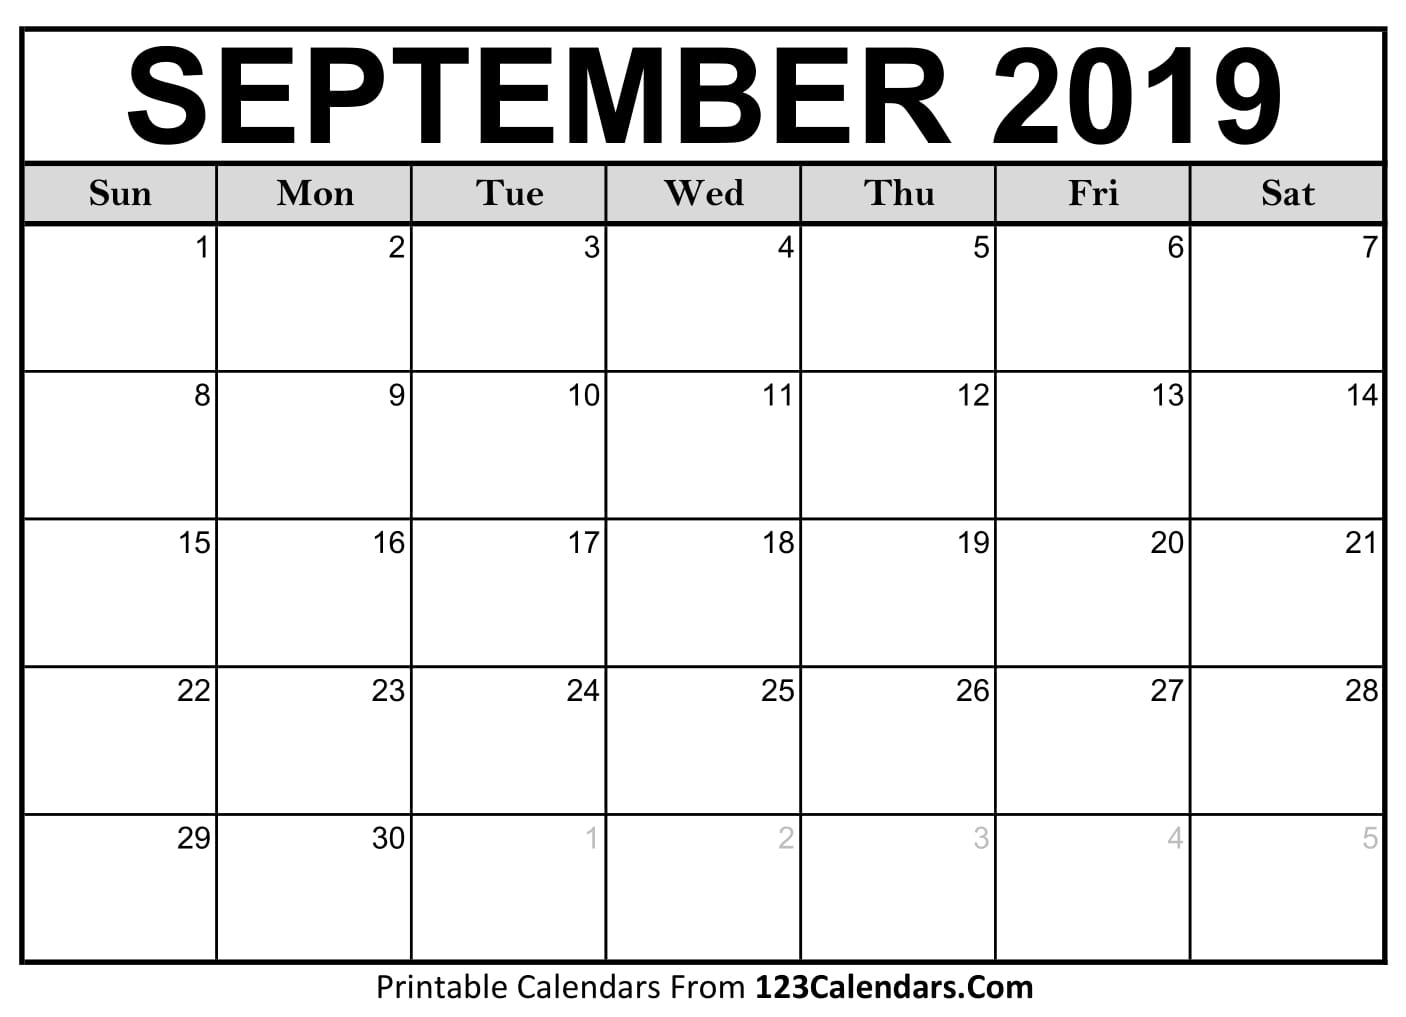 September 2019 Printable Calendar | 123Calendars